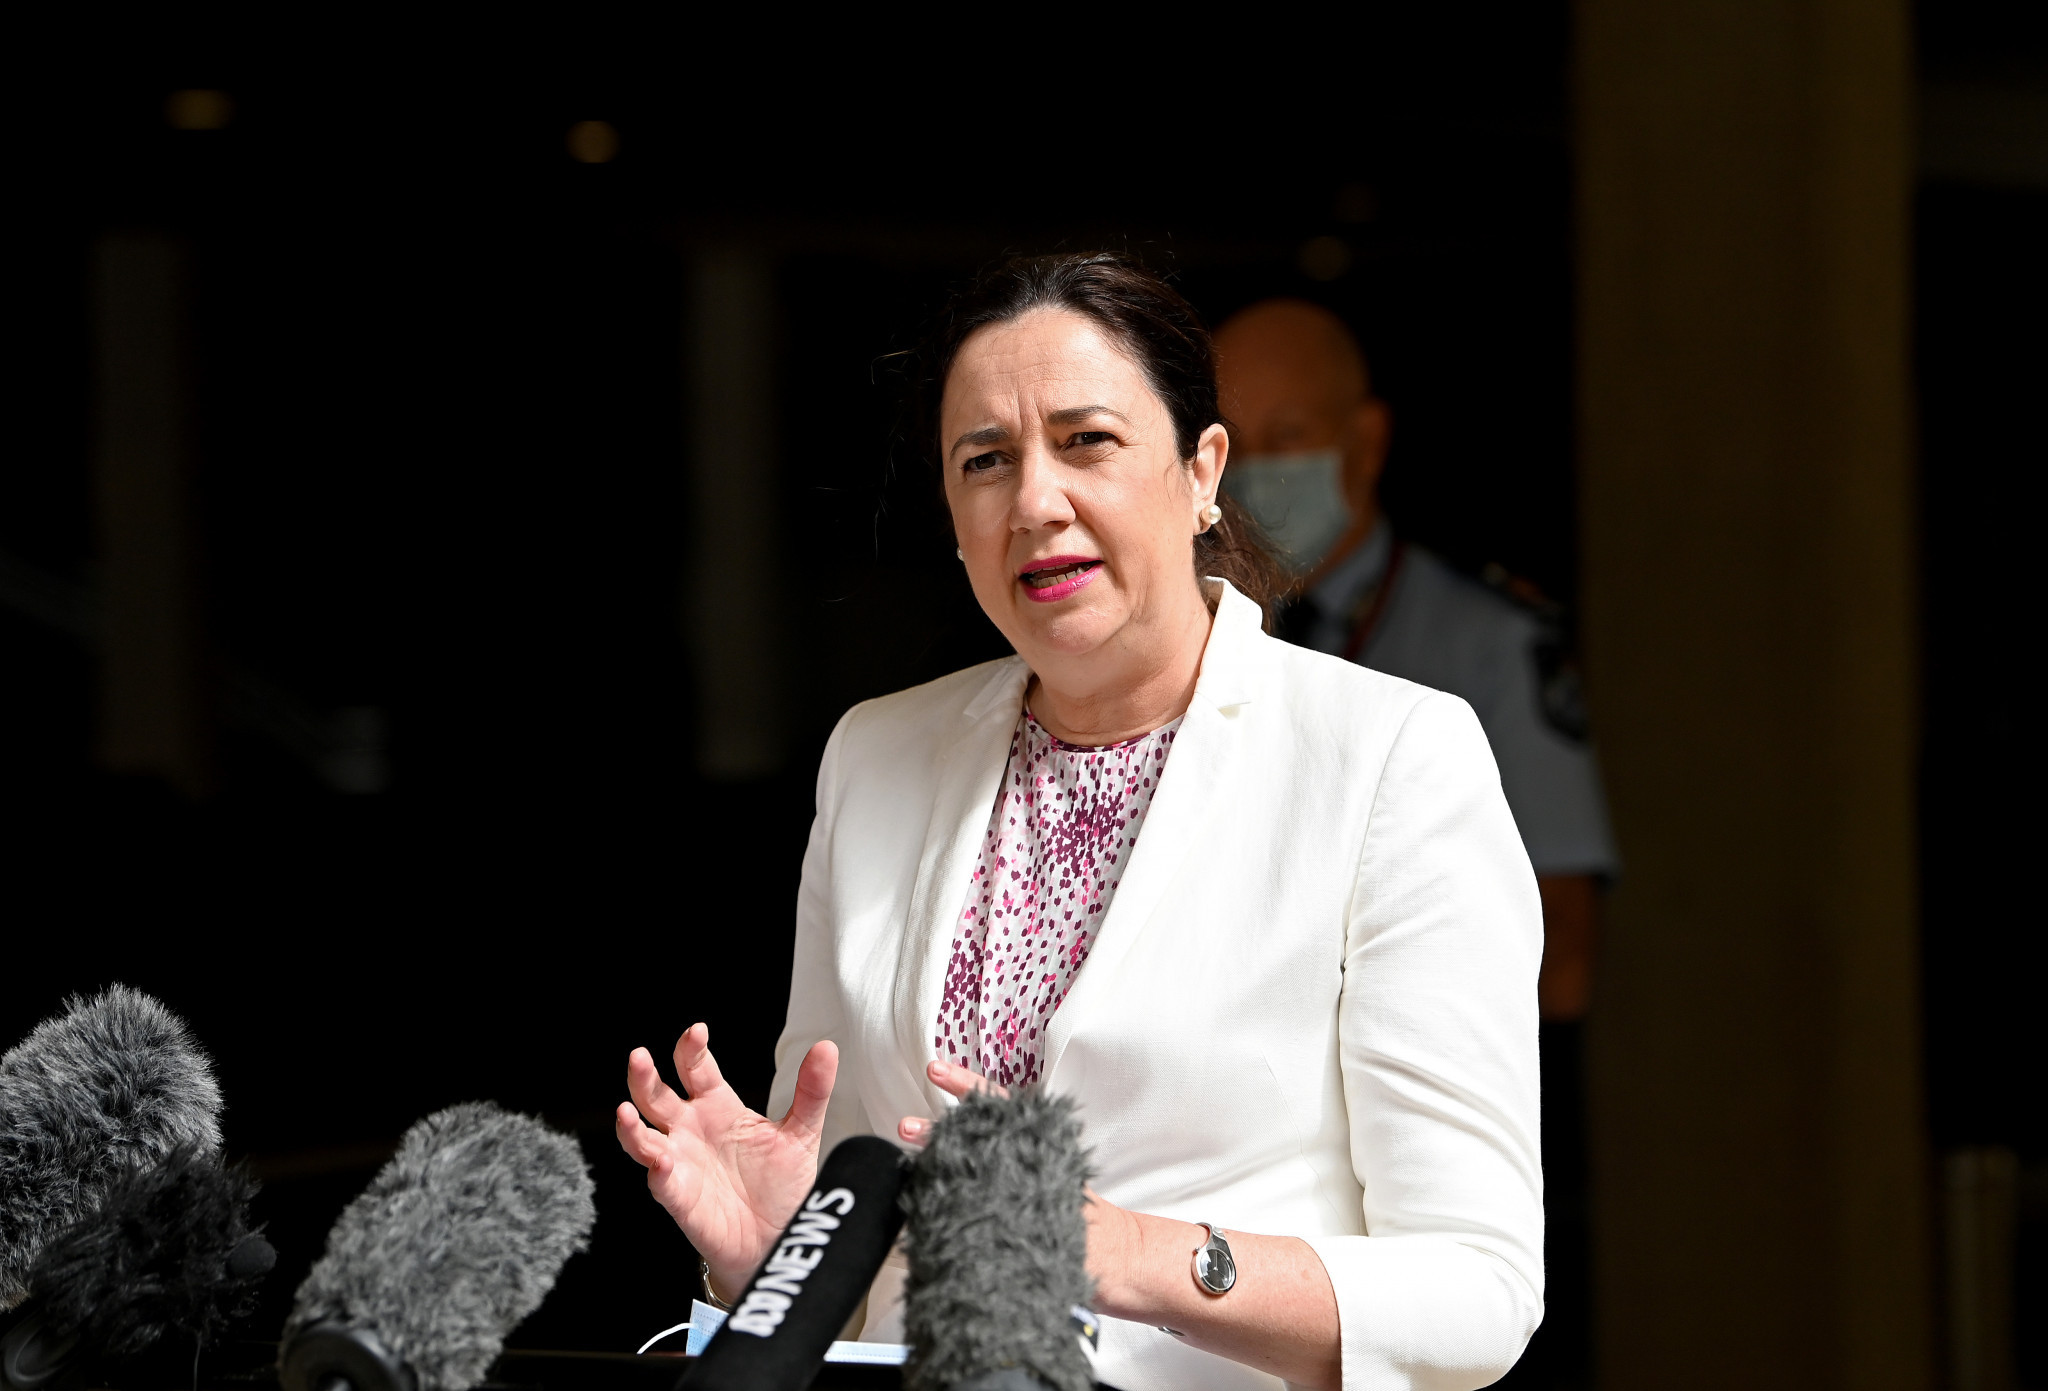 Queensland Premier Annastacia Palaszczuk says the new Centenary Bridge in Brisbane will get the public 